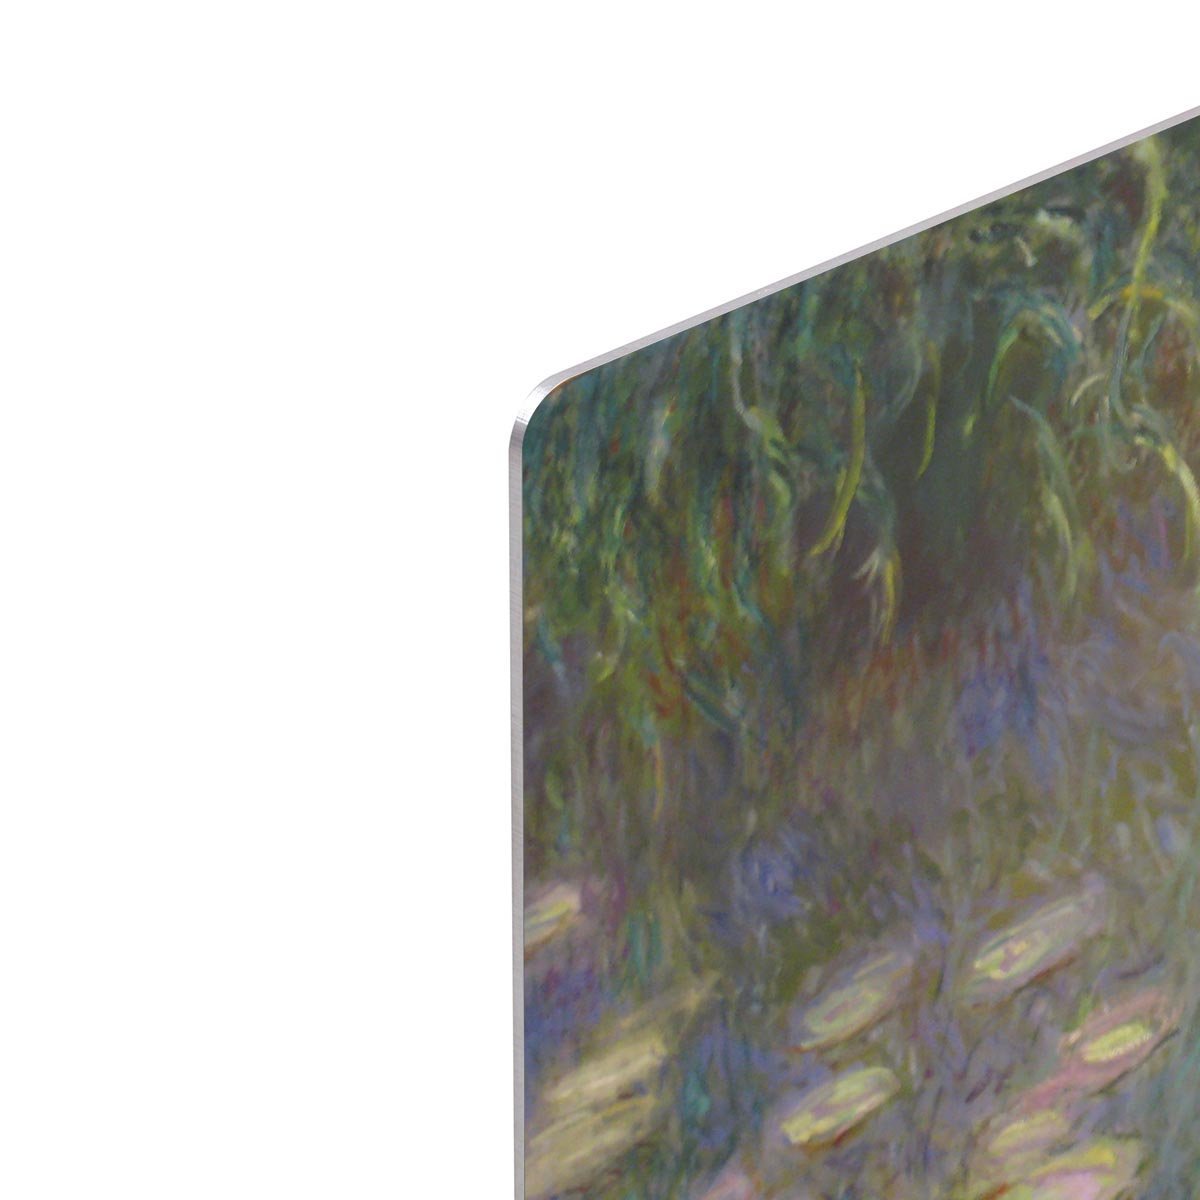 Water Lillies 13 by Monet HD Metal Print